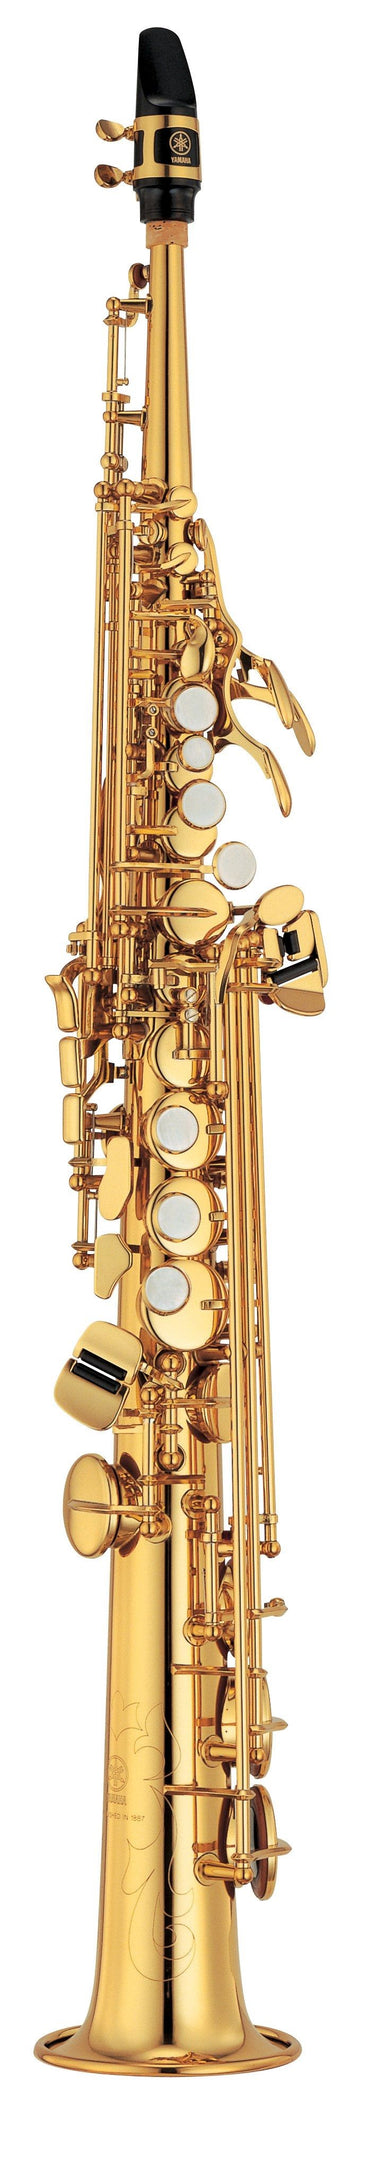 Yamaha YSS475 Bb Soprano Saxophone